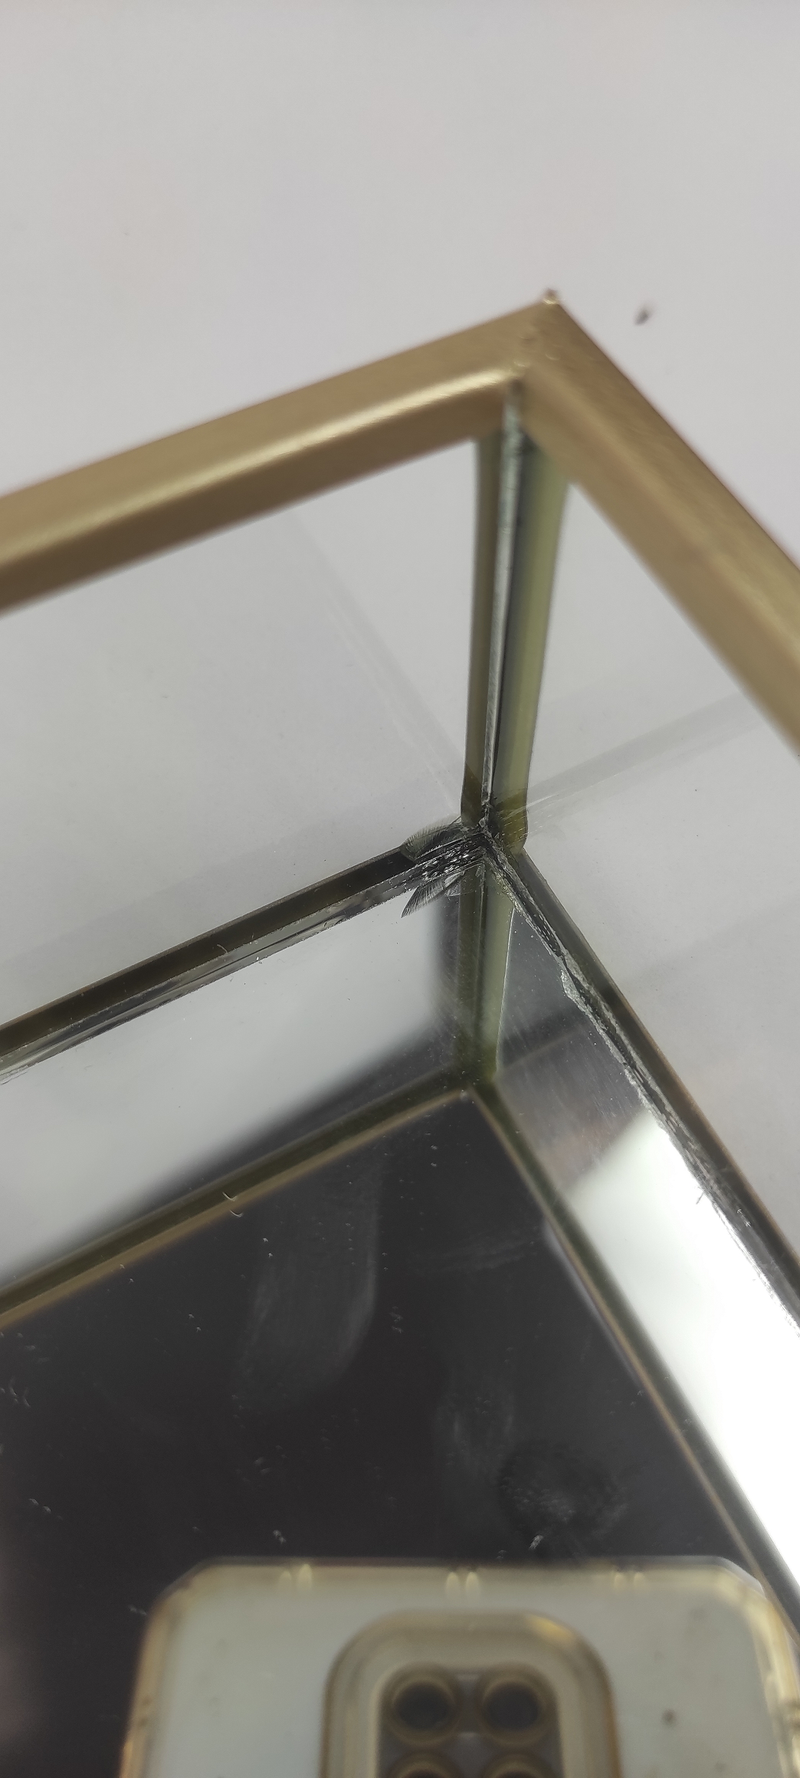 OUTLET Podstawka szklana na drobiazgi, 40 x 20 x 5 cm